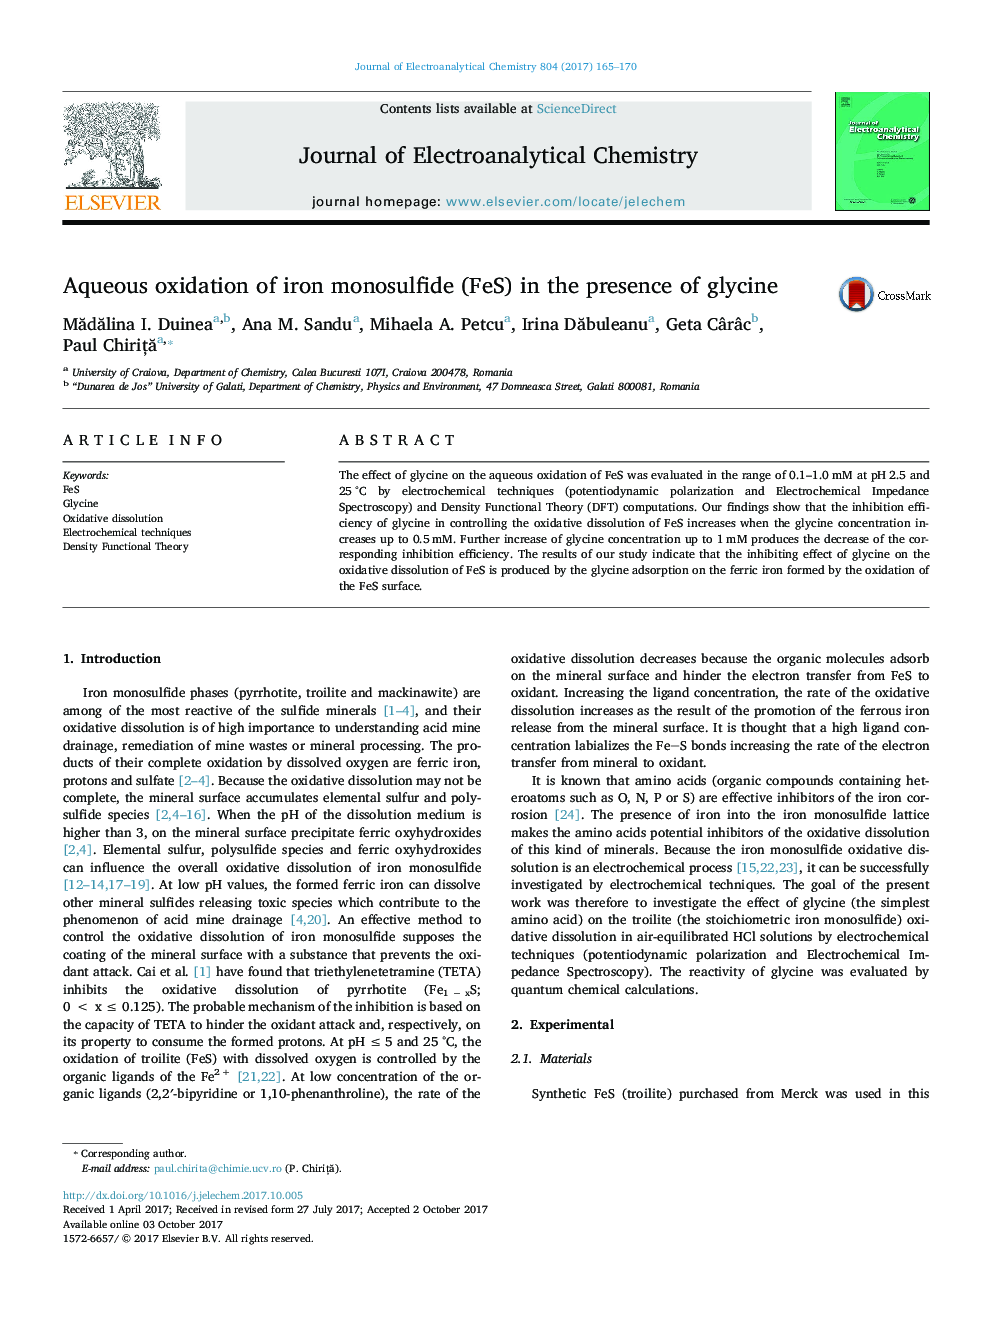 Aqueous oxidation of iron monosulfide (FeS) in the presence of glycine